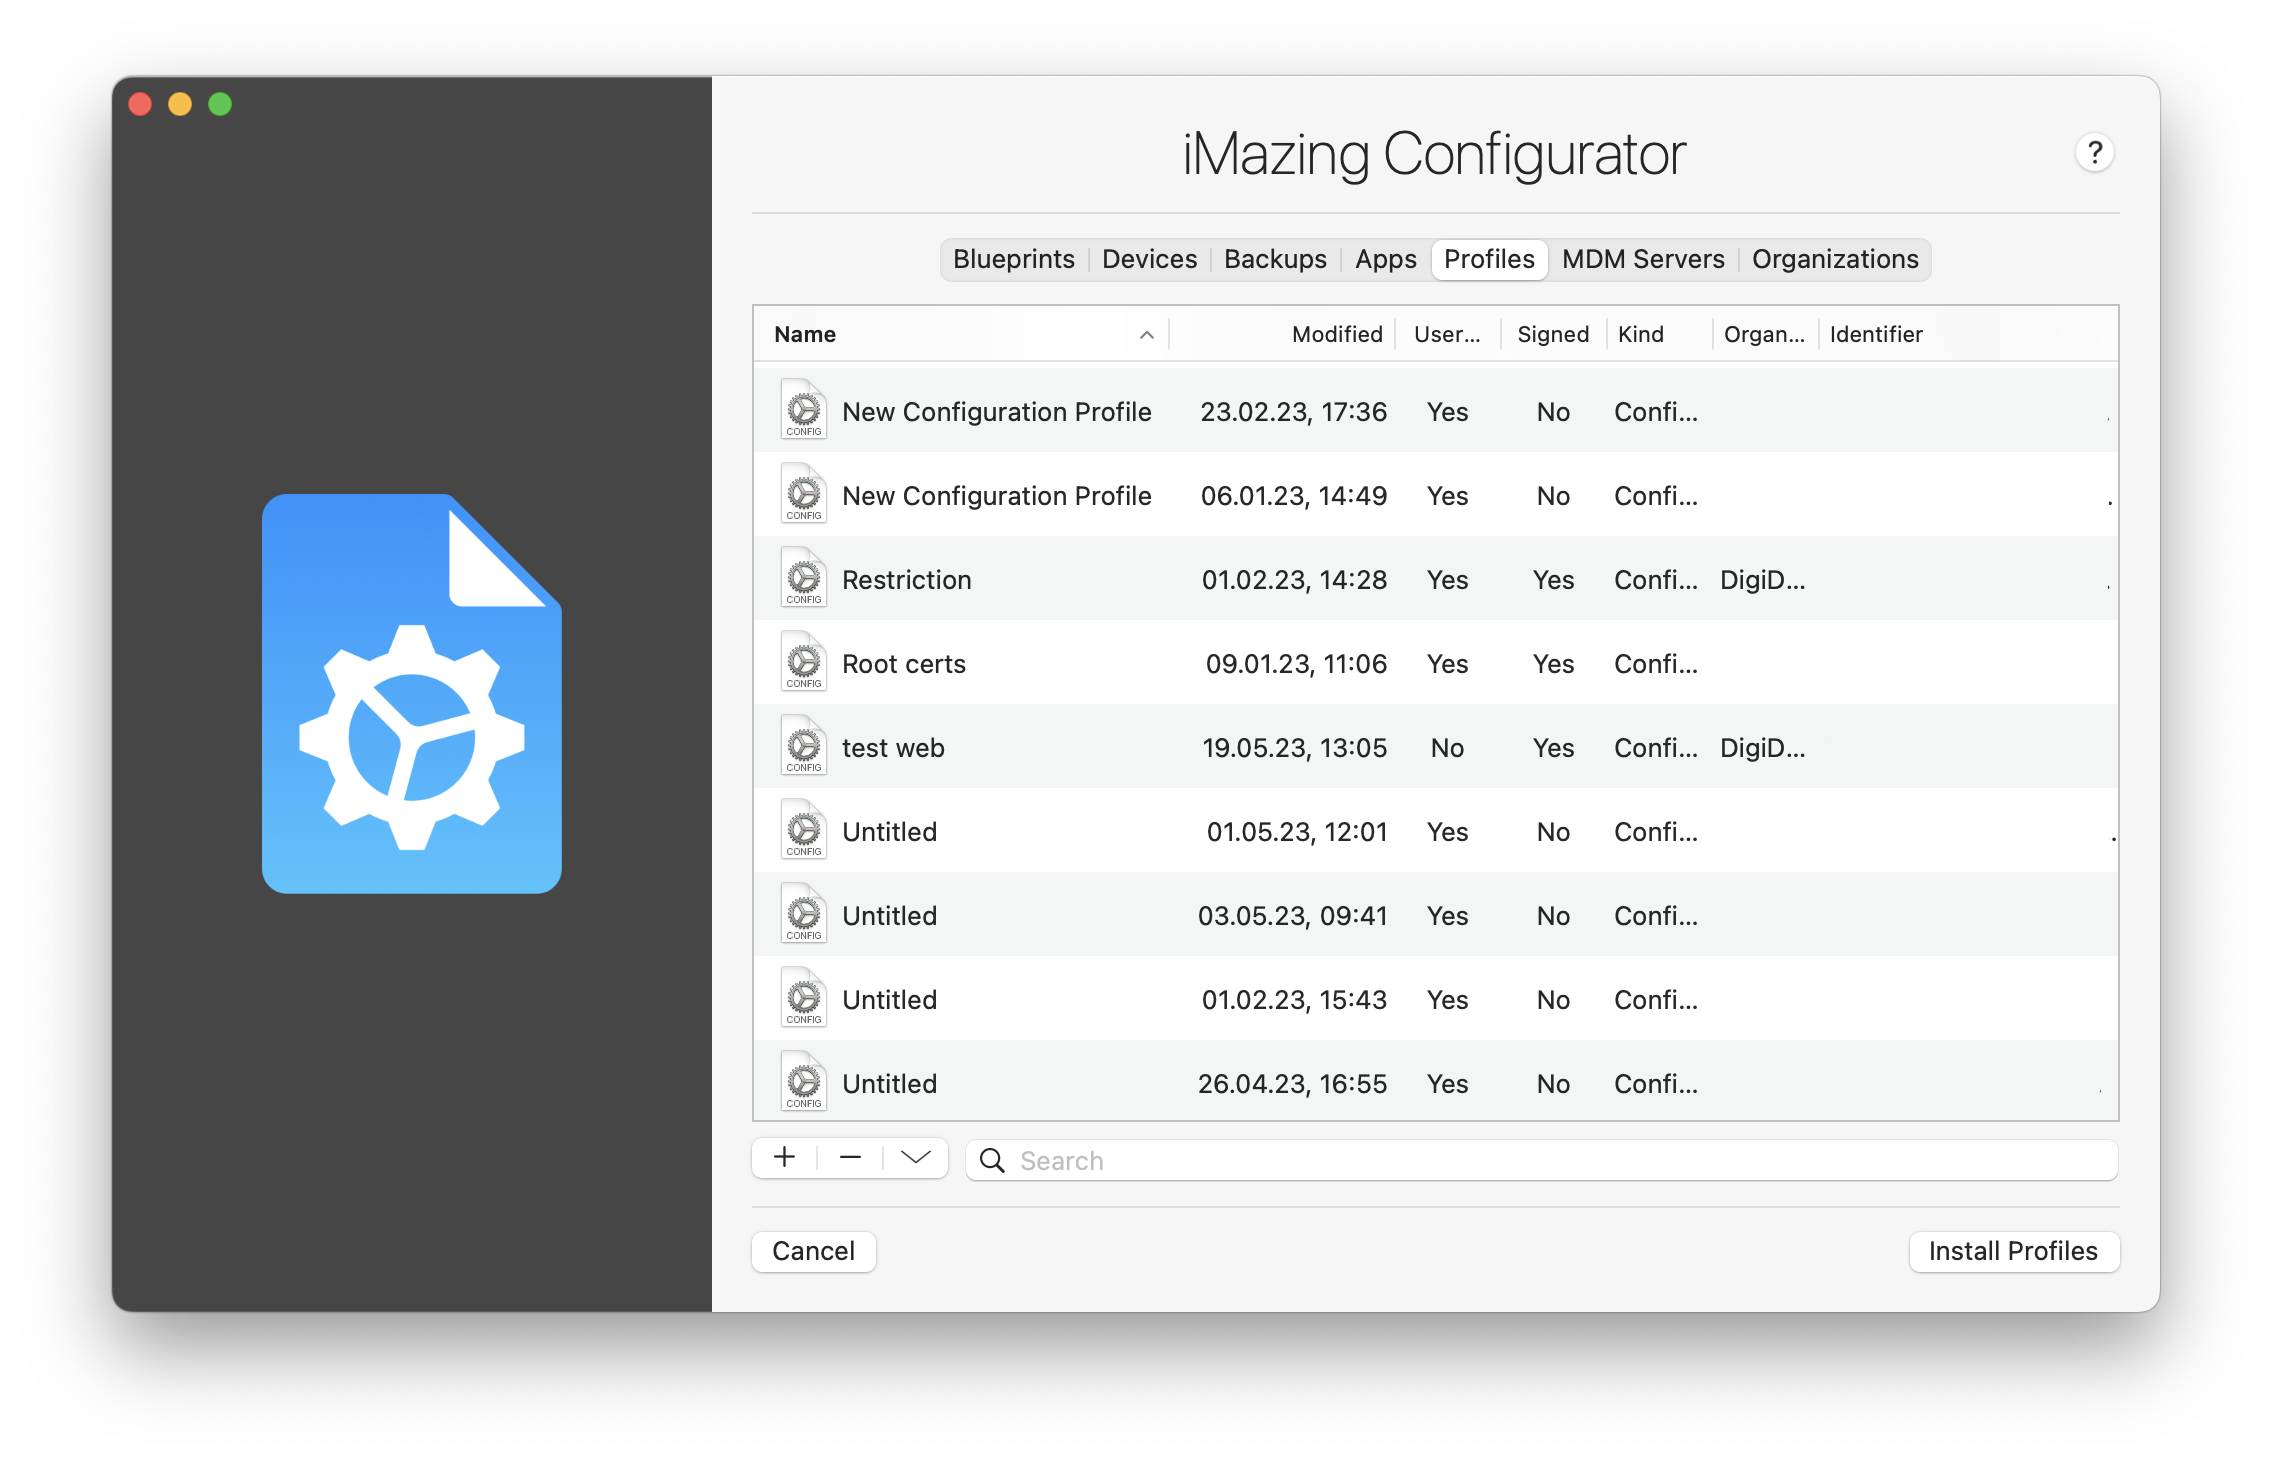 iMazing Configurator Library, Profiles Section